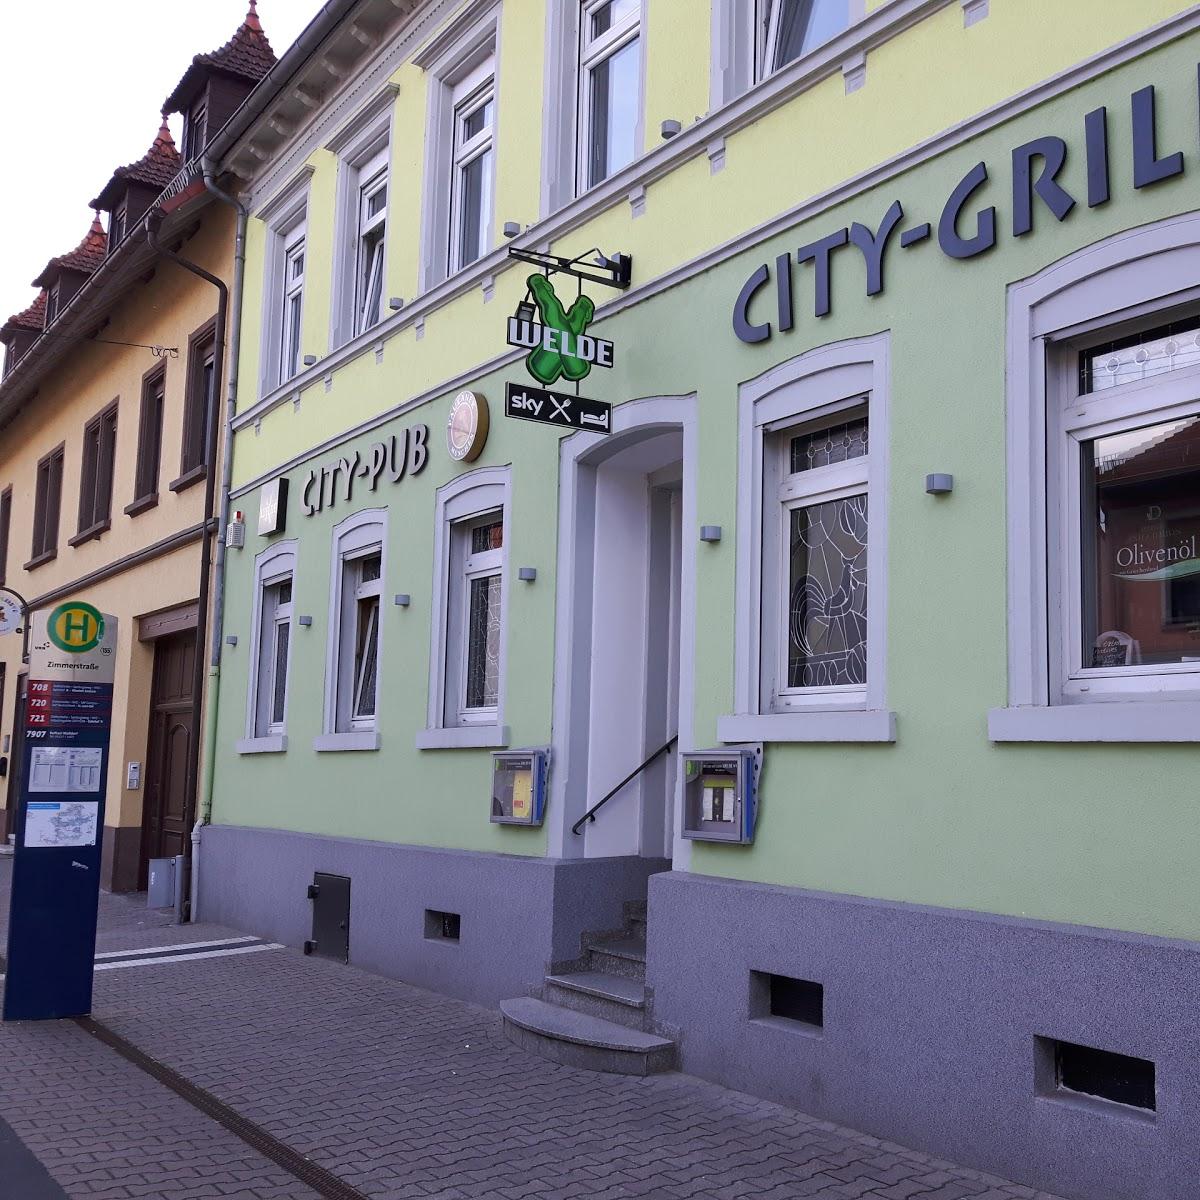 Restaurant "City-Grill und City-Pub" in Walldorf